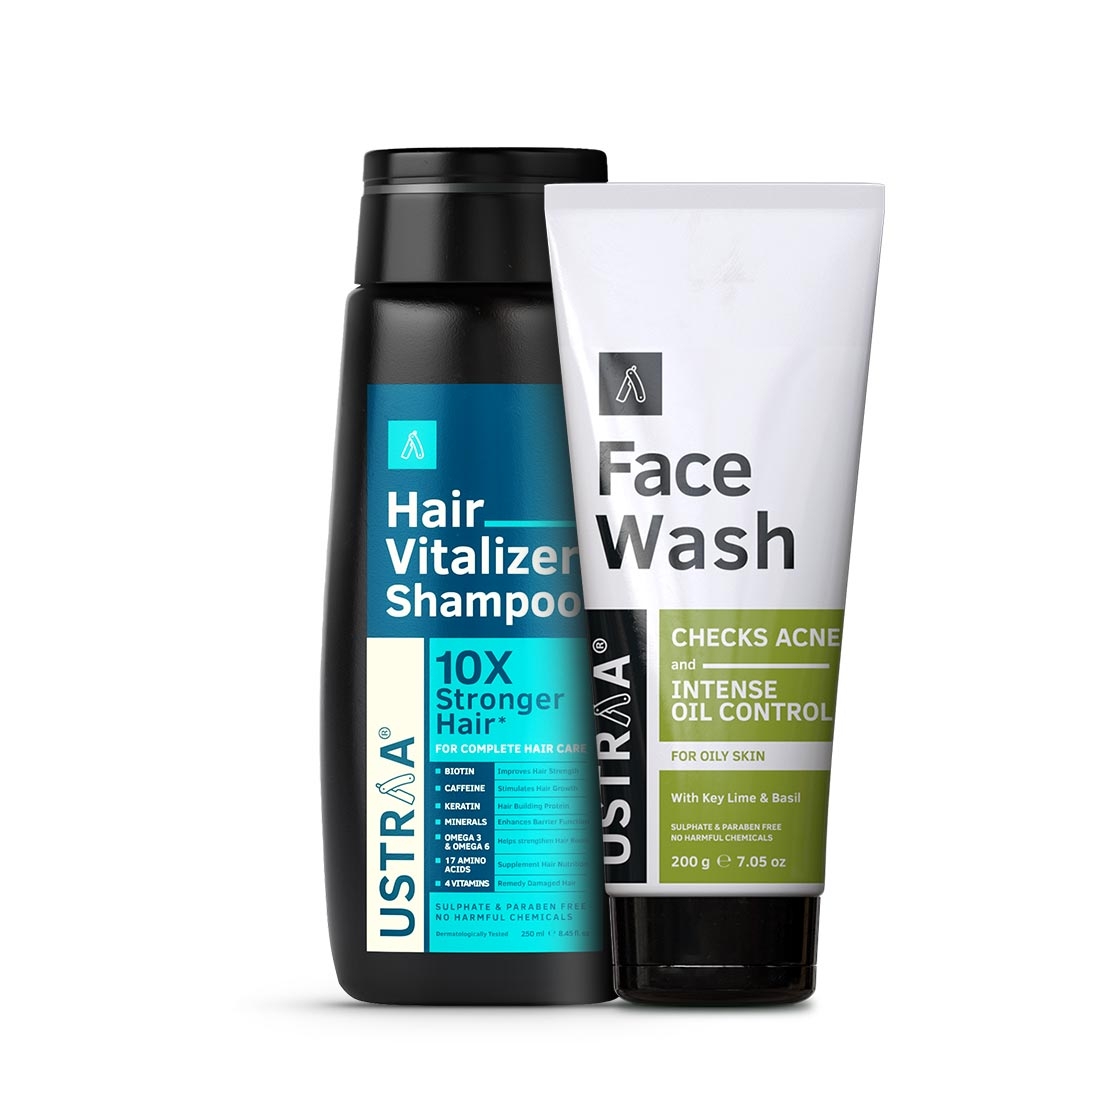 Ustraa | Ustraa Hair Vitalizer Shampoo - 250ml & Face Wash Oily Skin - 200g 0